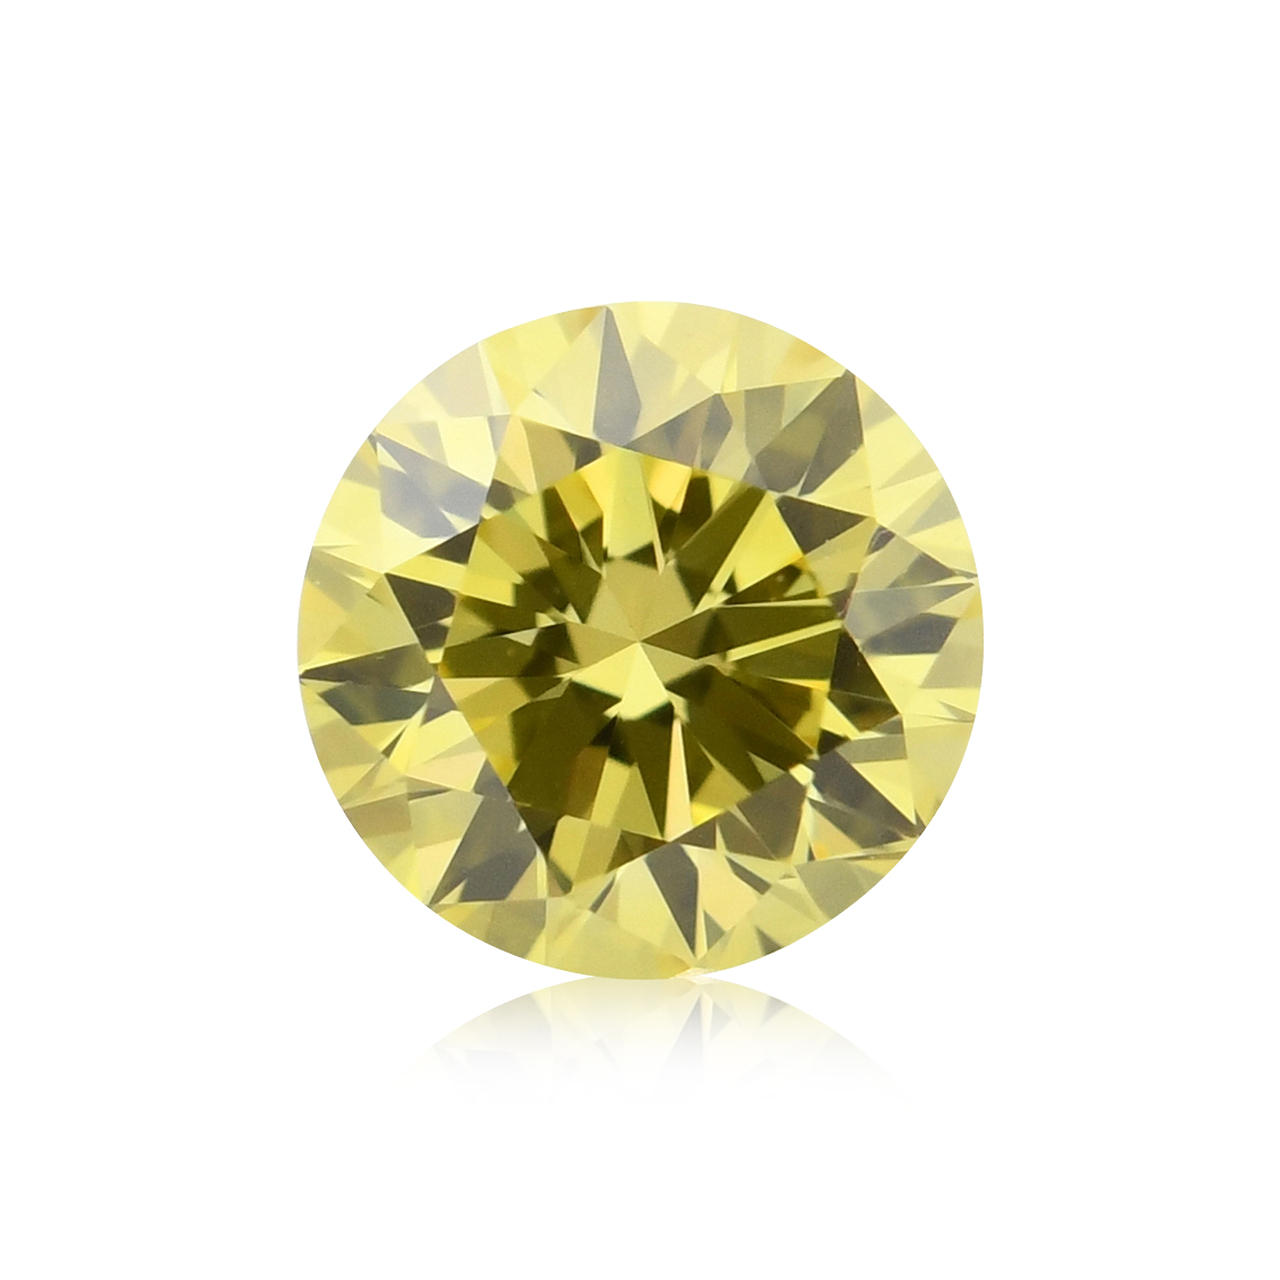 0.45 carat, Fancy Intense Yellow Diamond, Round Shape, VVS2 